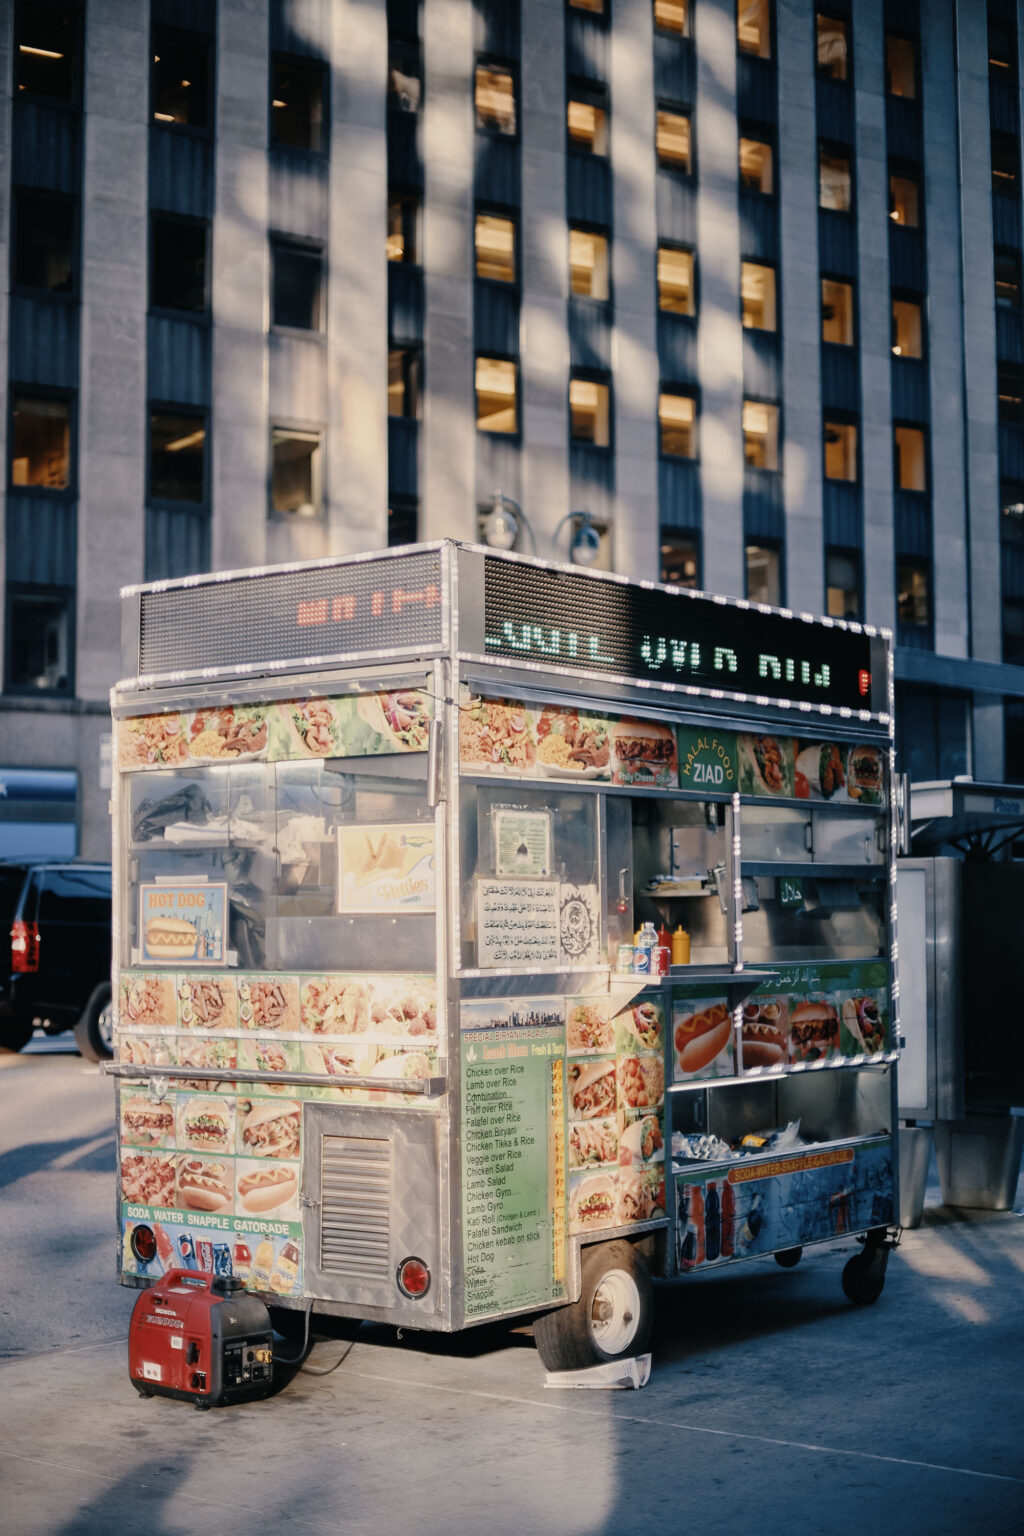 New York City Food Truck photo documentation